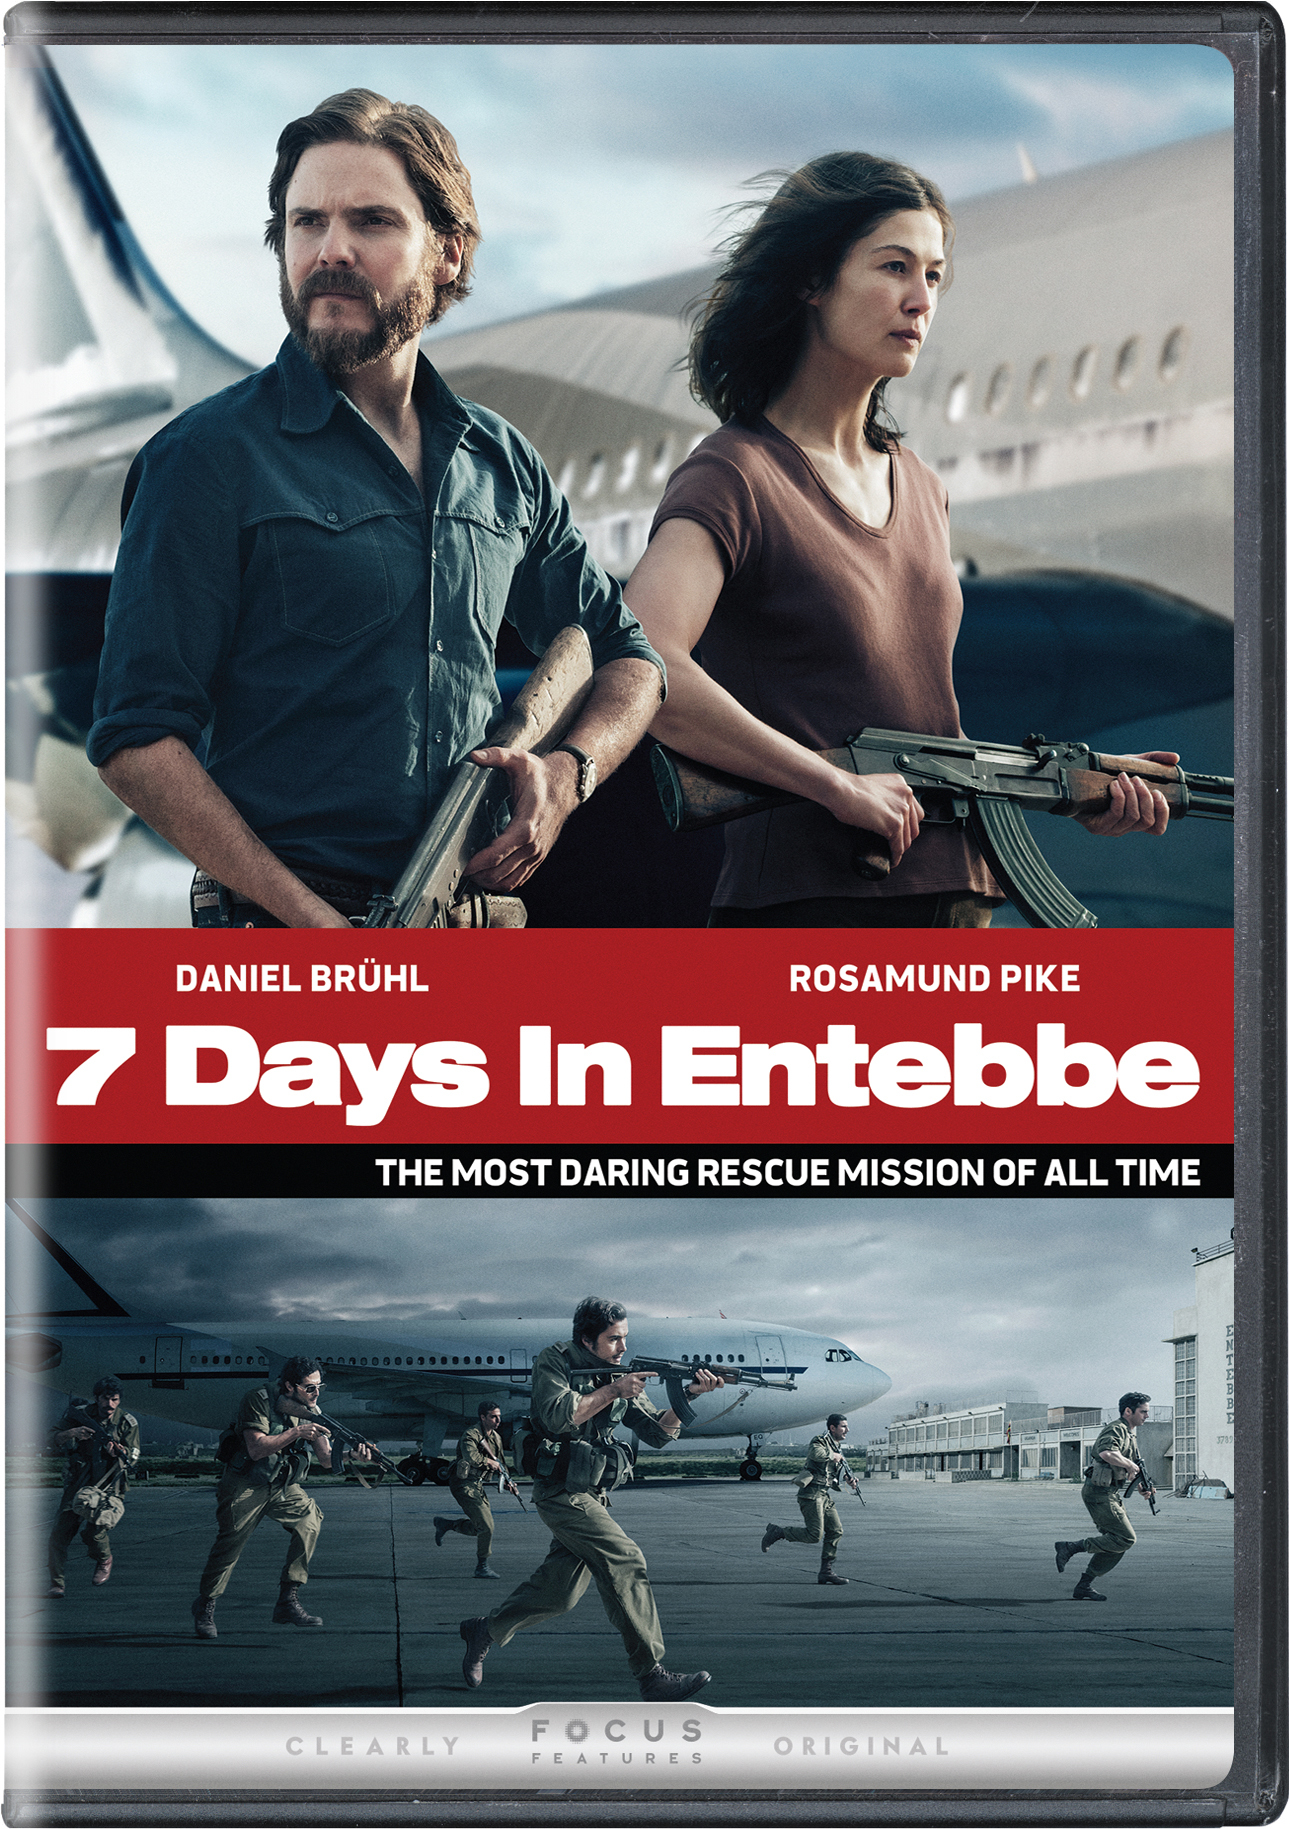 7 Days In Entebbe - DVD [ 2018 ]  - Thriller Movies On DVD - Movies On GRUV